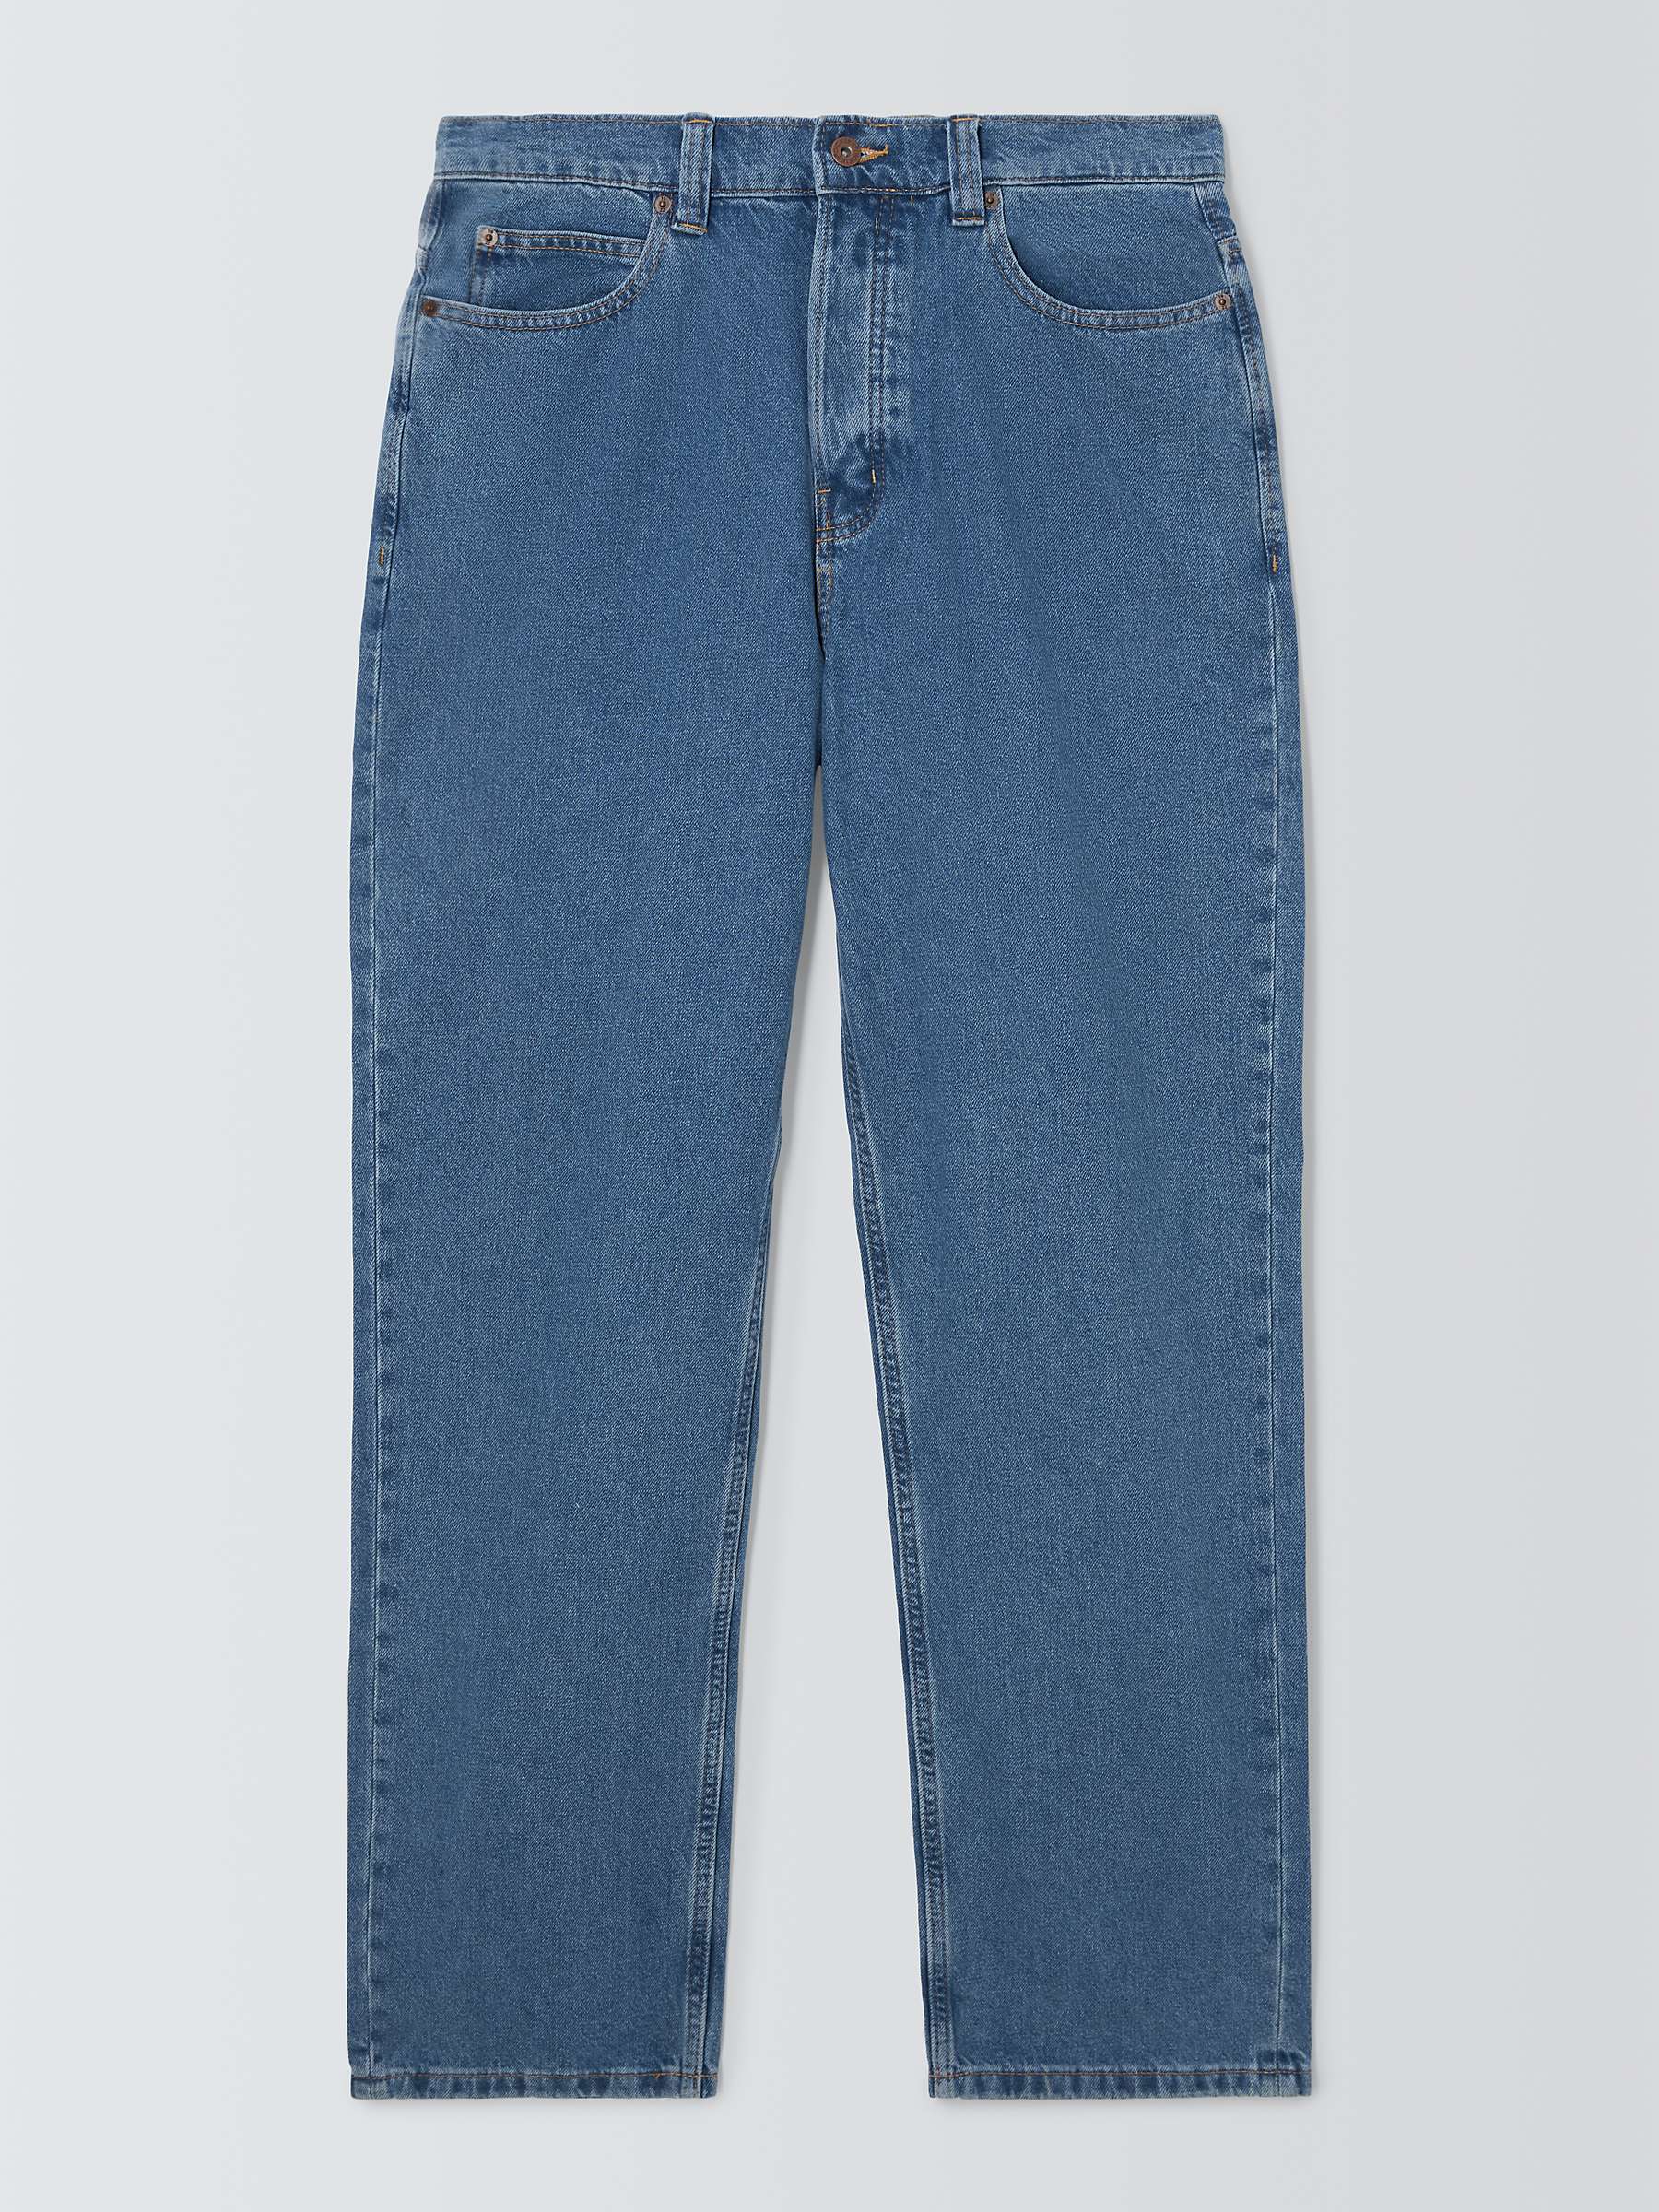 Buy Dickies Thomasville Denim Jeans, Blue Online at johnlewis.com